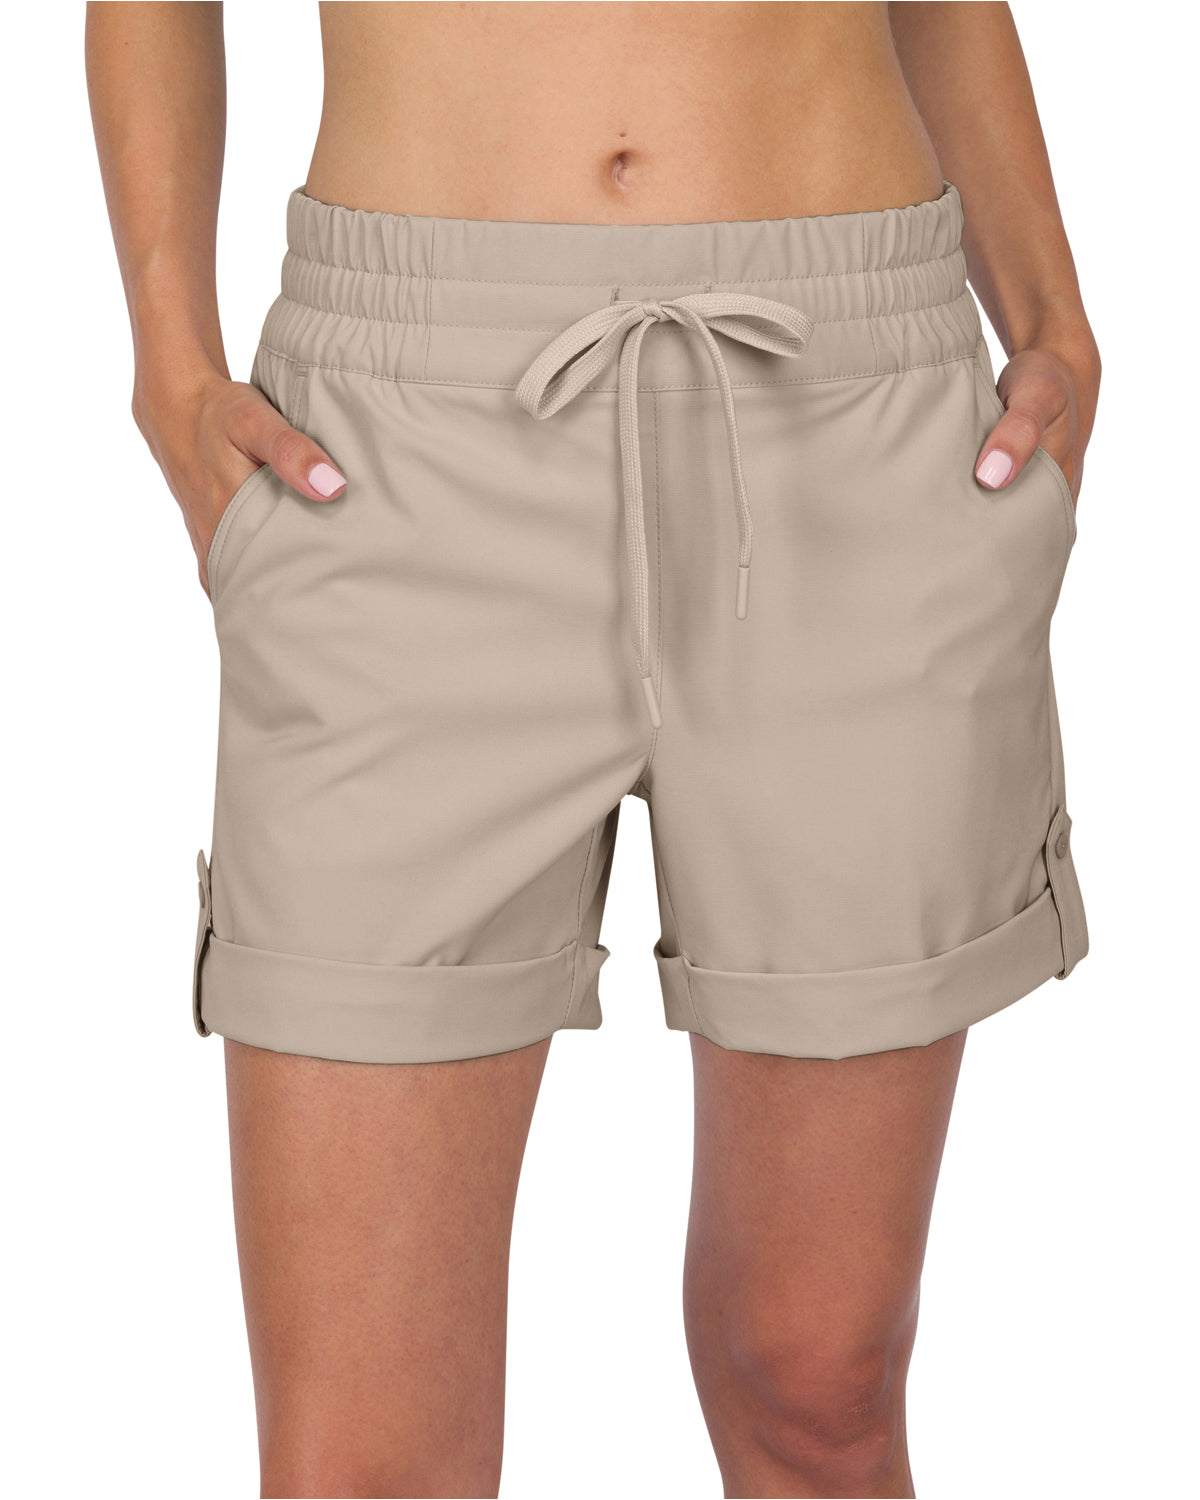 Three Sixty Six Womens Golf Shorts - 5” Inseam, Quick Dry Active Shorts  w/Pockets, Adjustable Drawstring & Stretchy Waistband